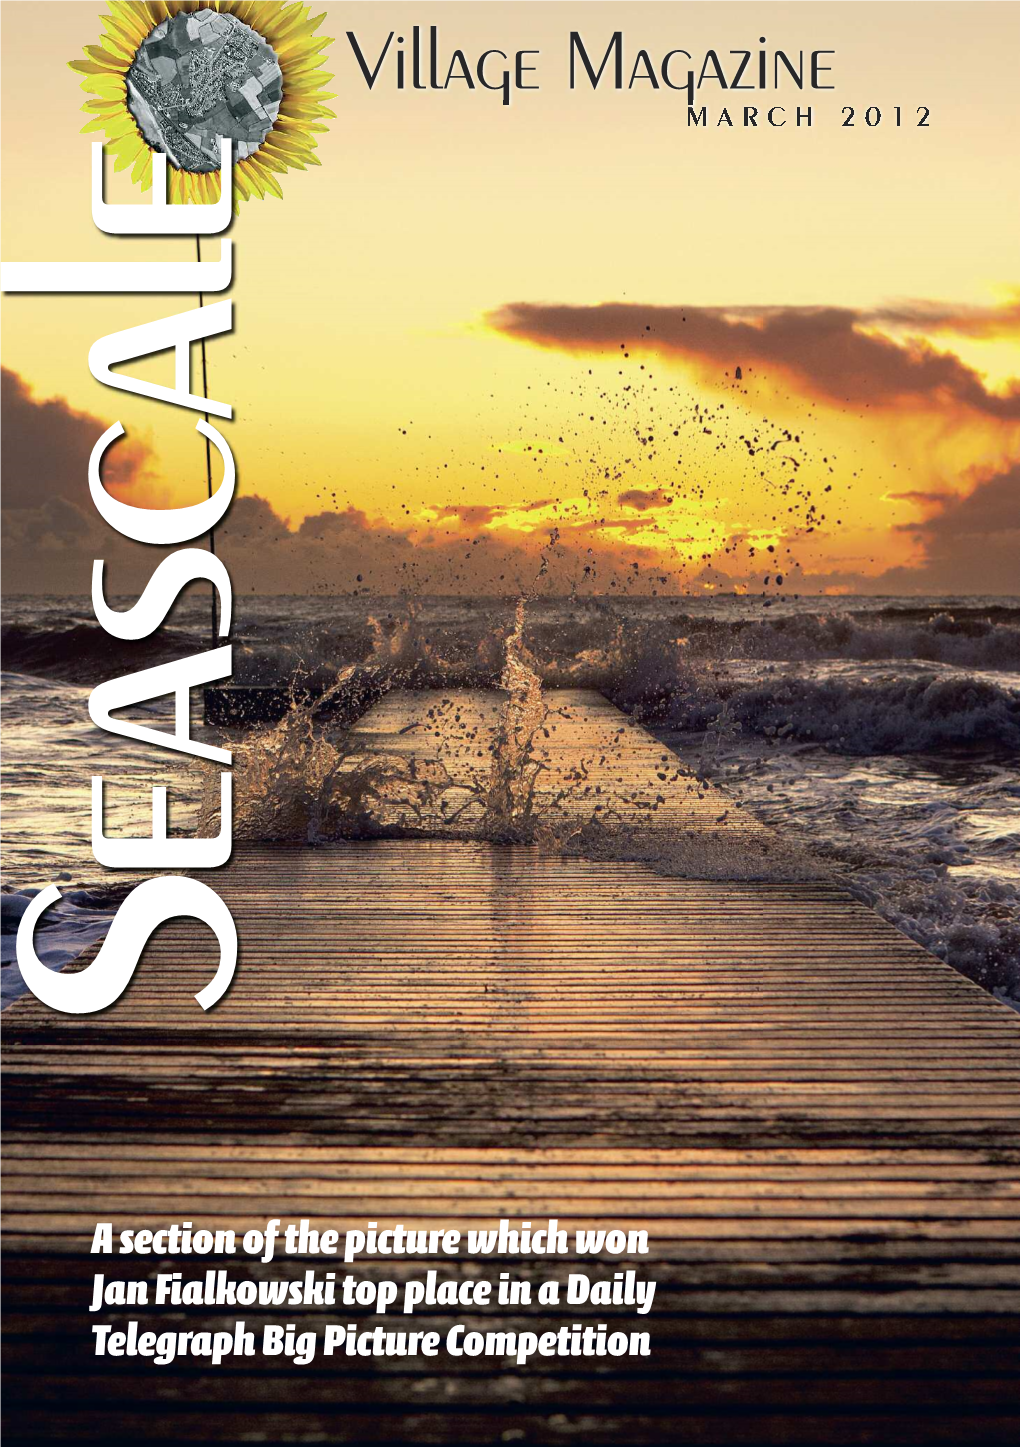 Seascale Magazine, Has Been Published